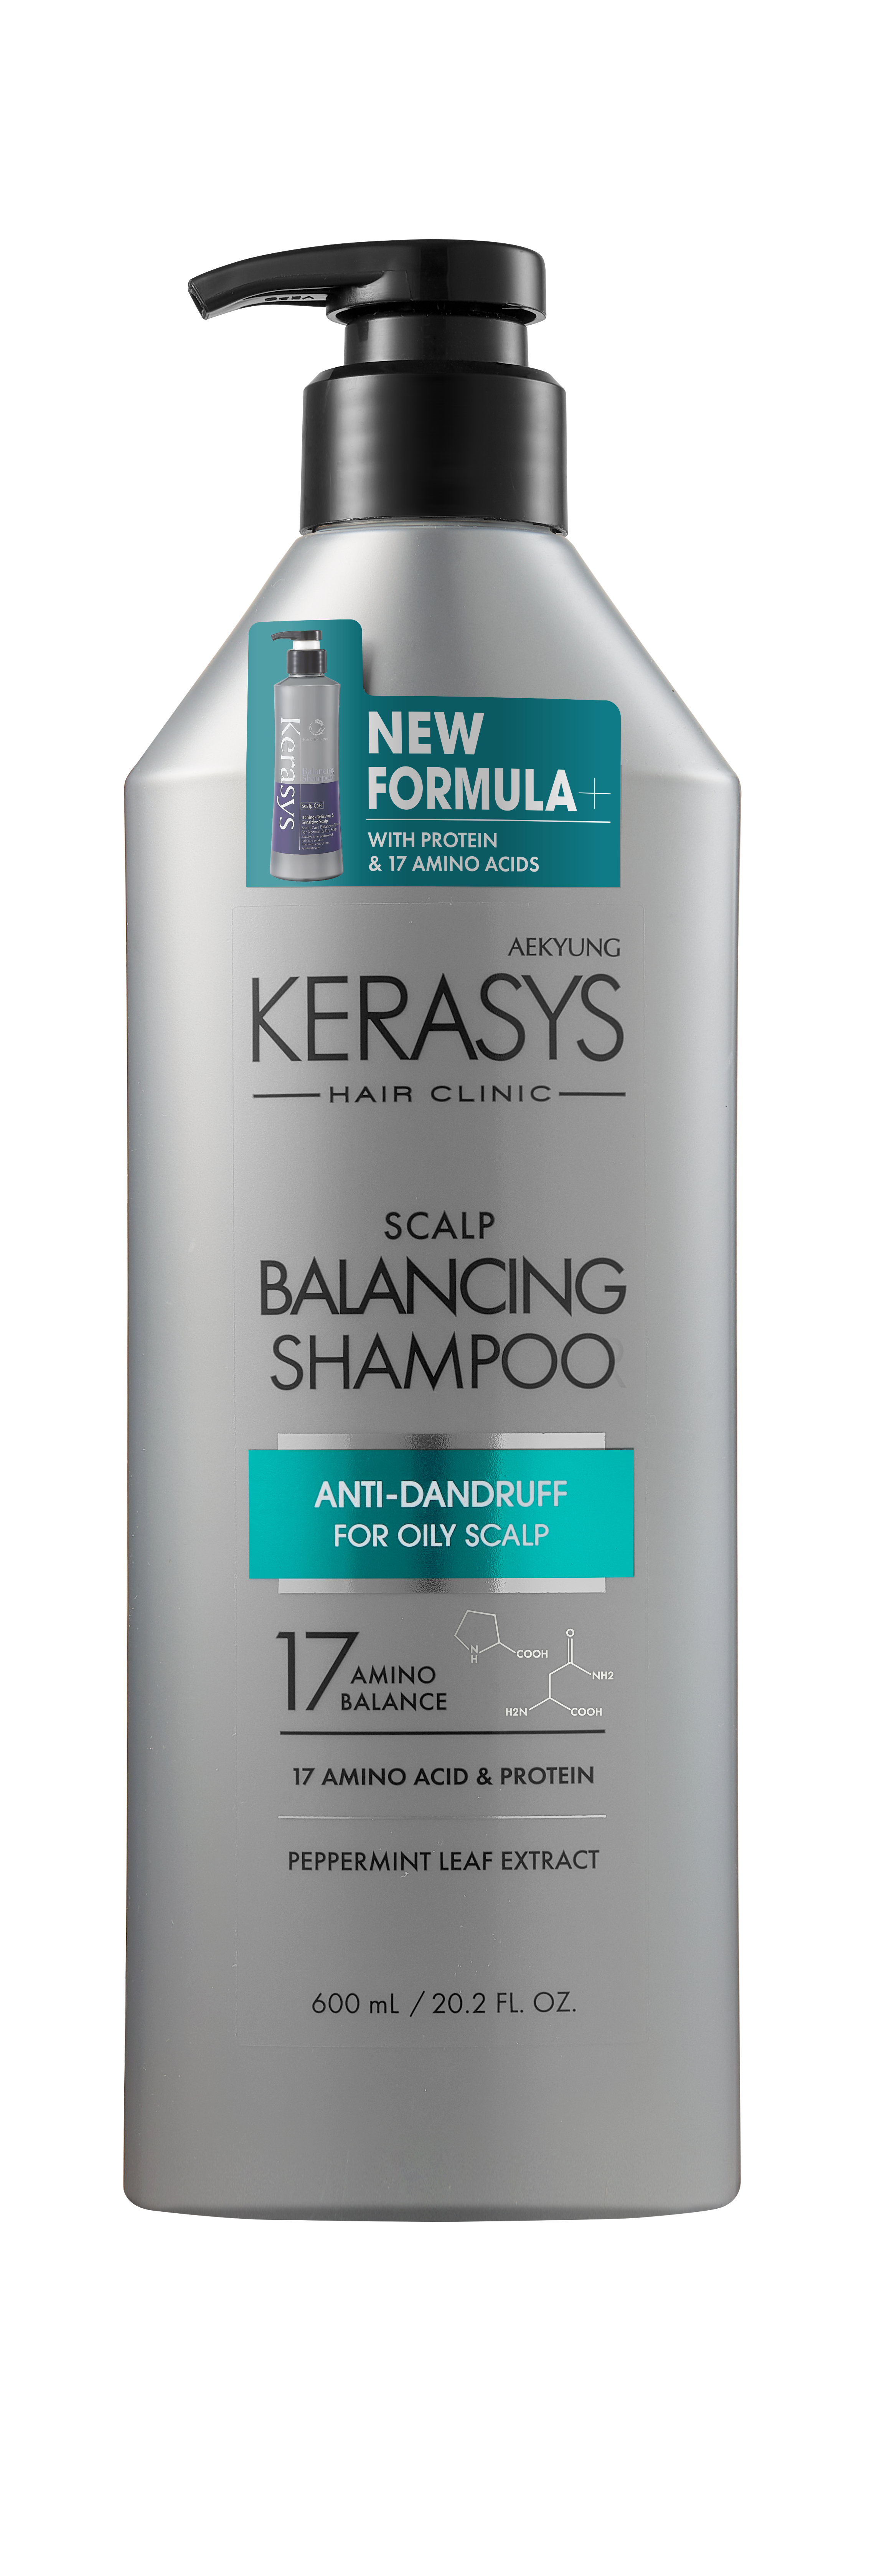 Aekyung Kerasys Hair Clinic Scalp Balancing Шампунь для волос уход за жирной кожей головы 600 мл